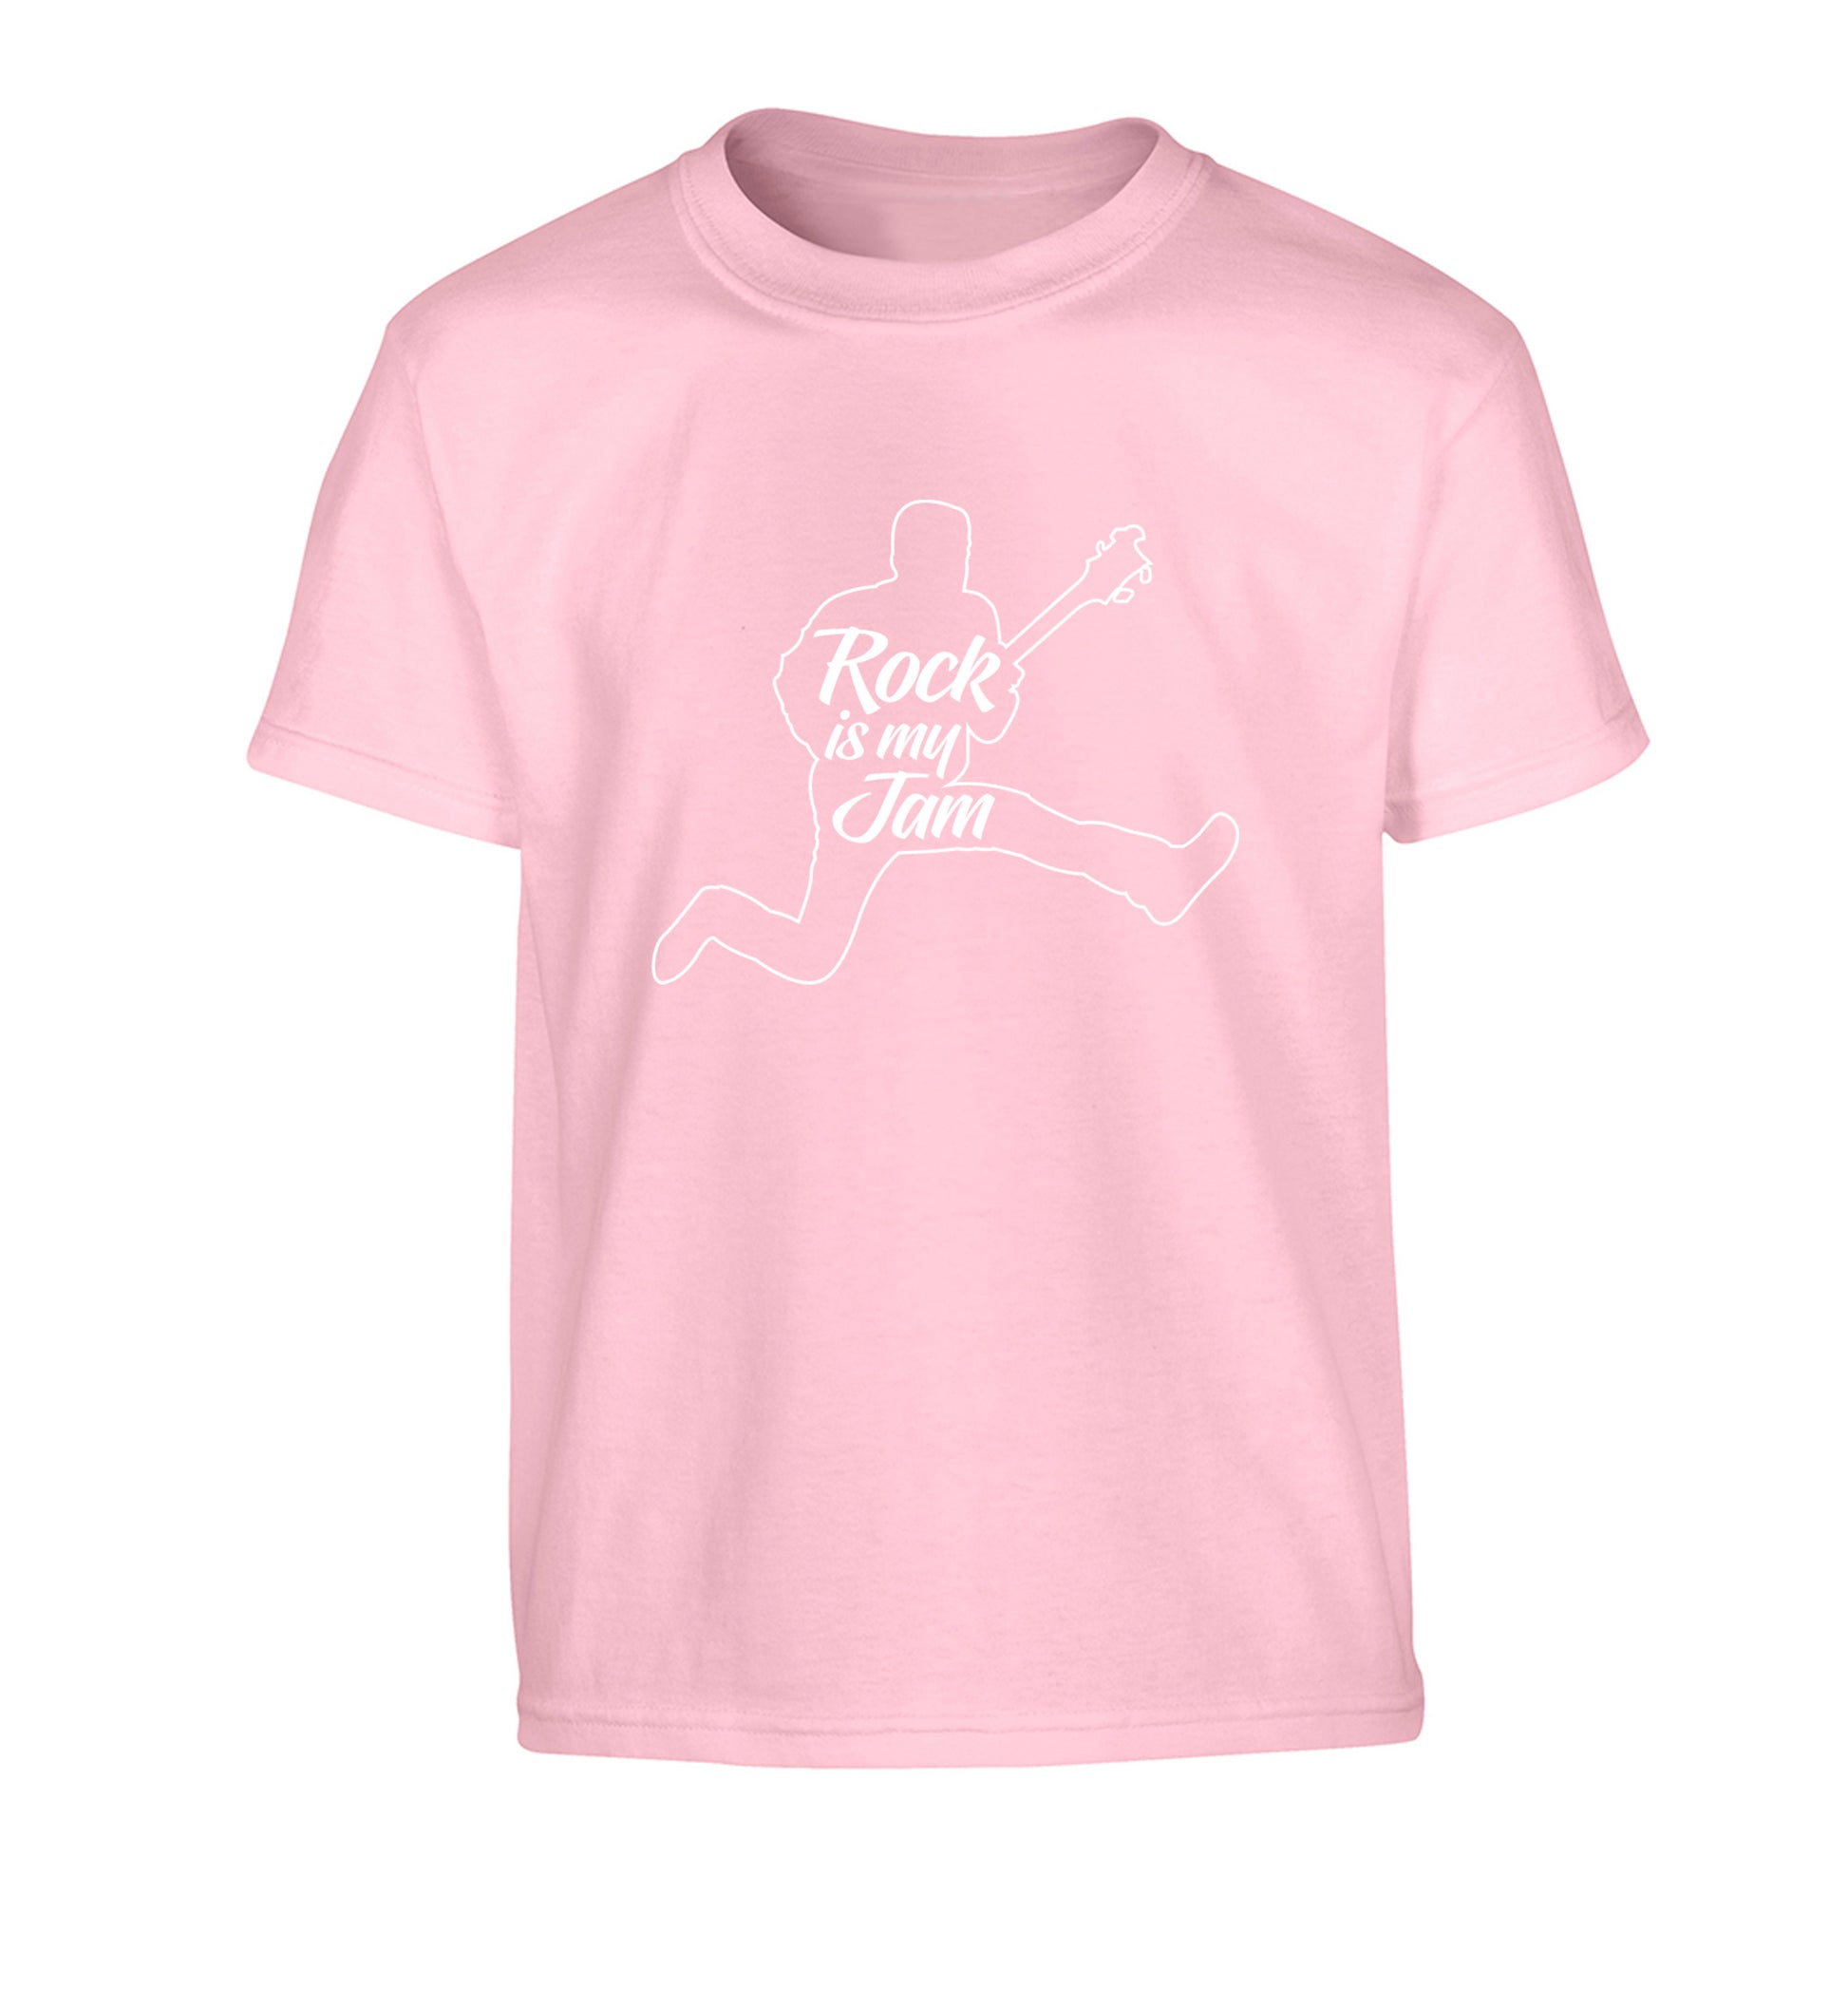 Rock is my jam Children's light pink Tshirt 12-13 Years